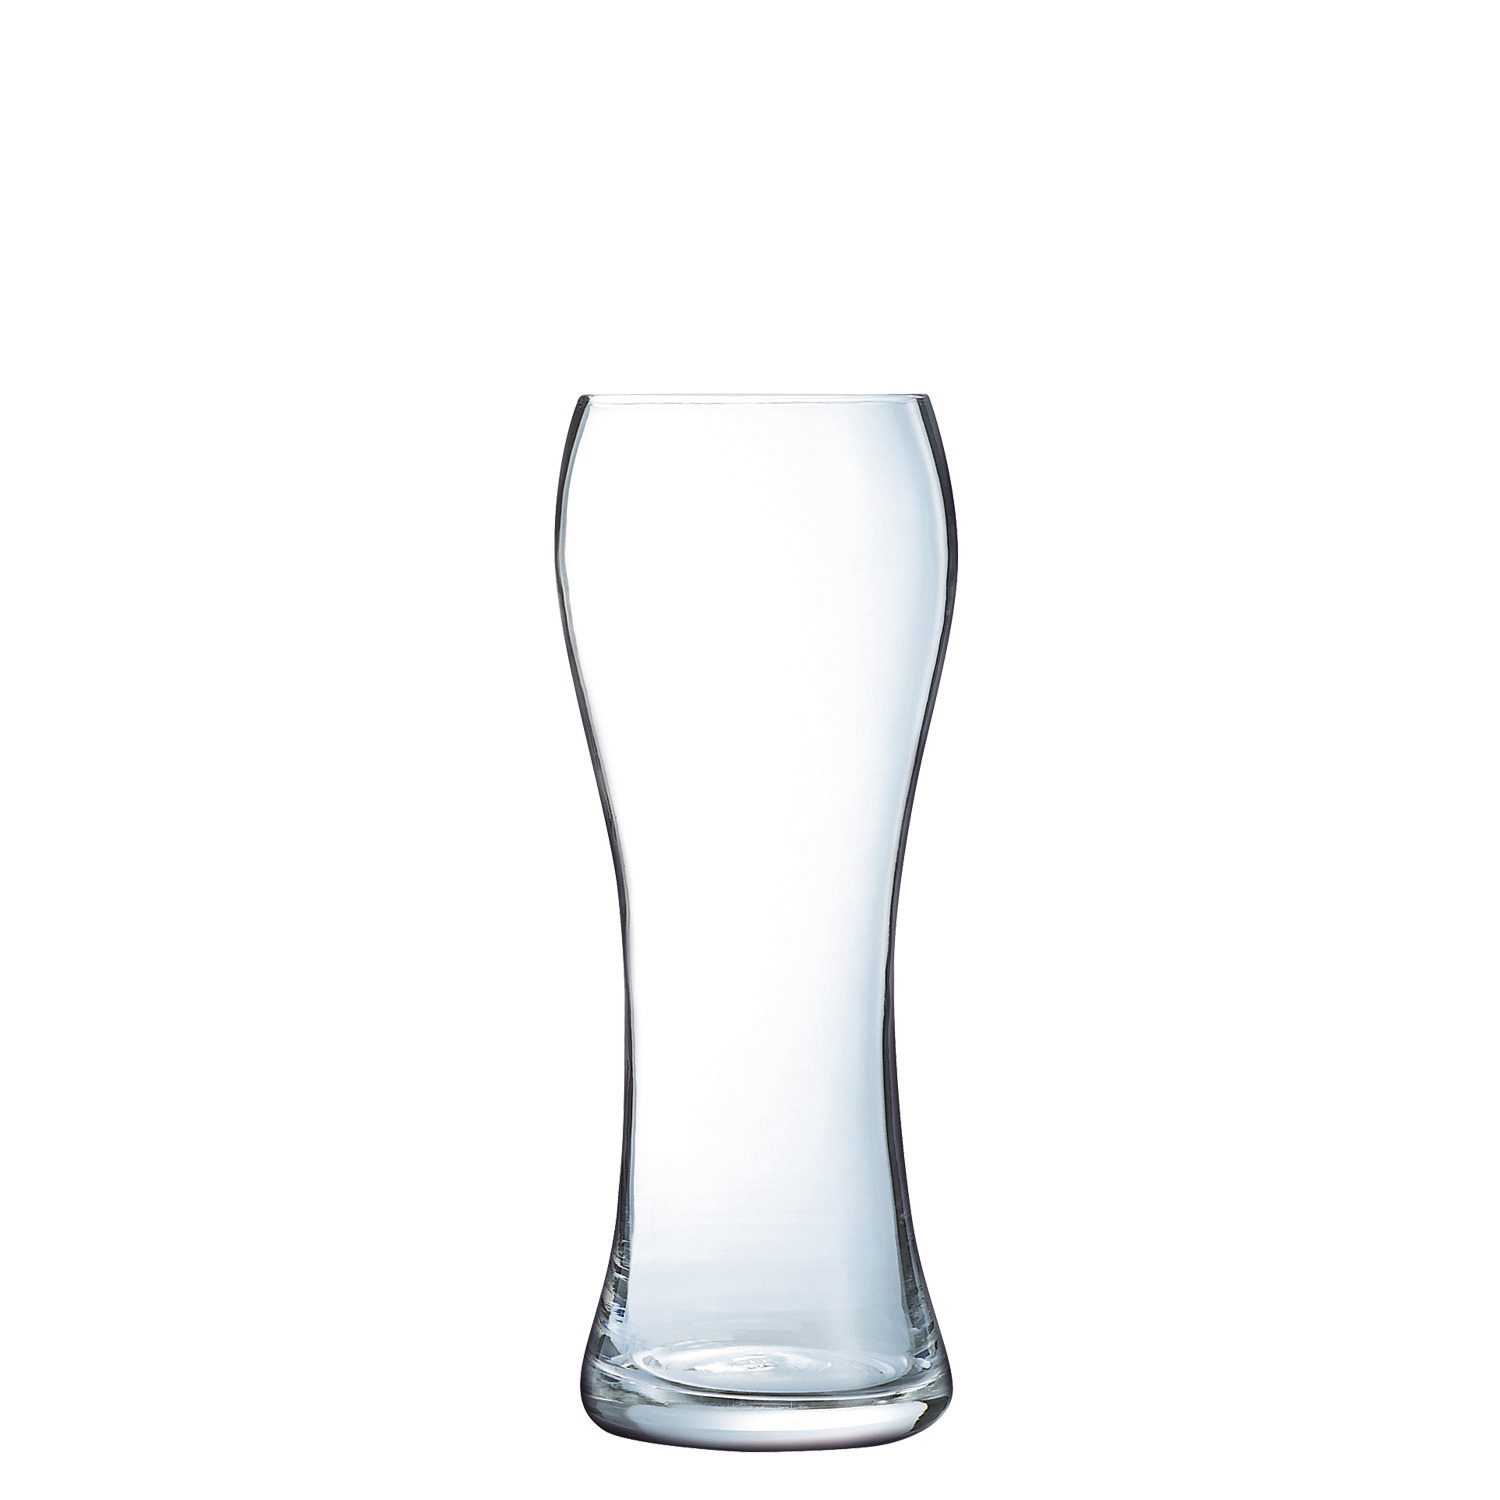 Weizenbierglas 82 mm / 0,59 l 0,40 /-/ transparent